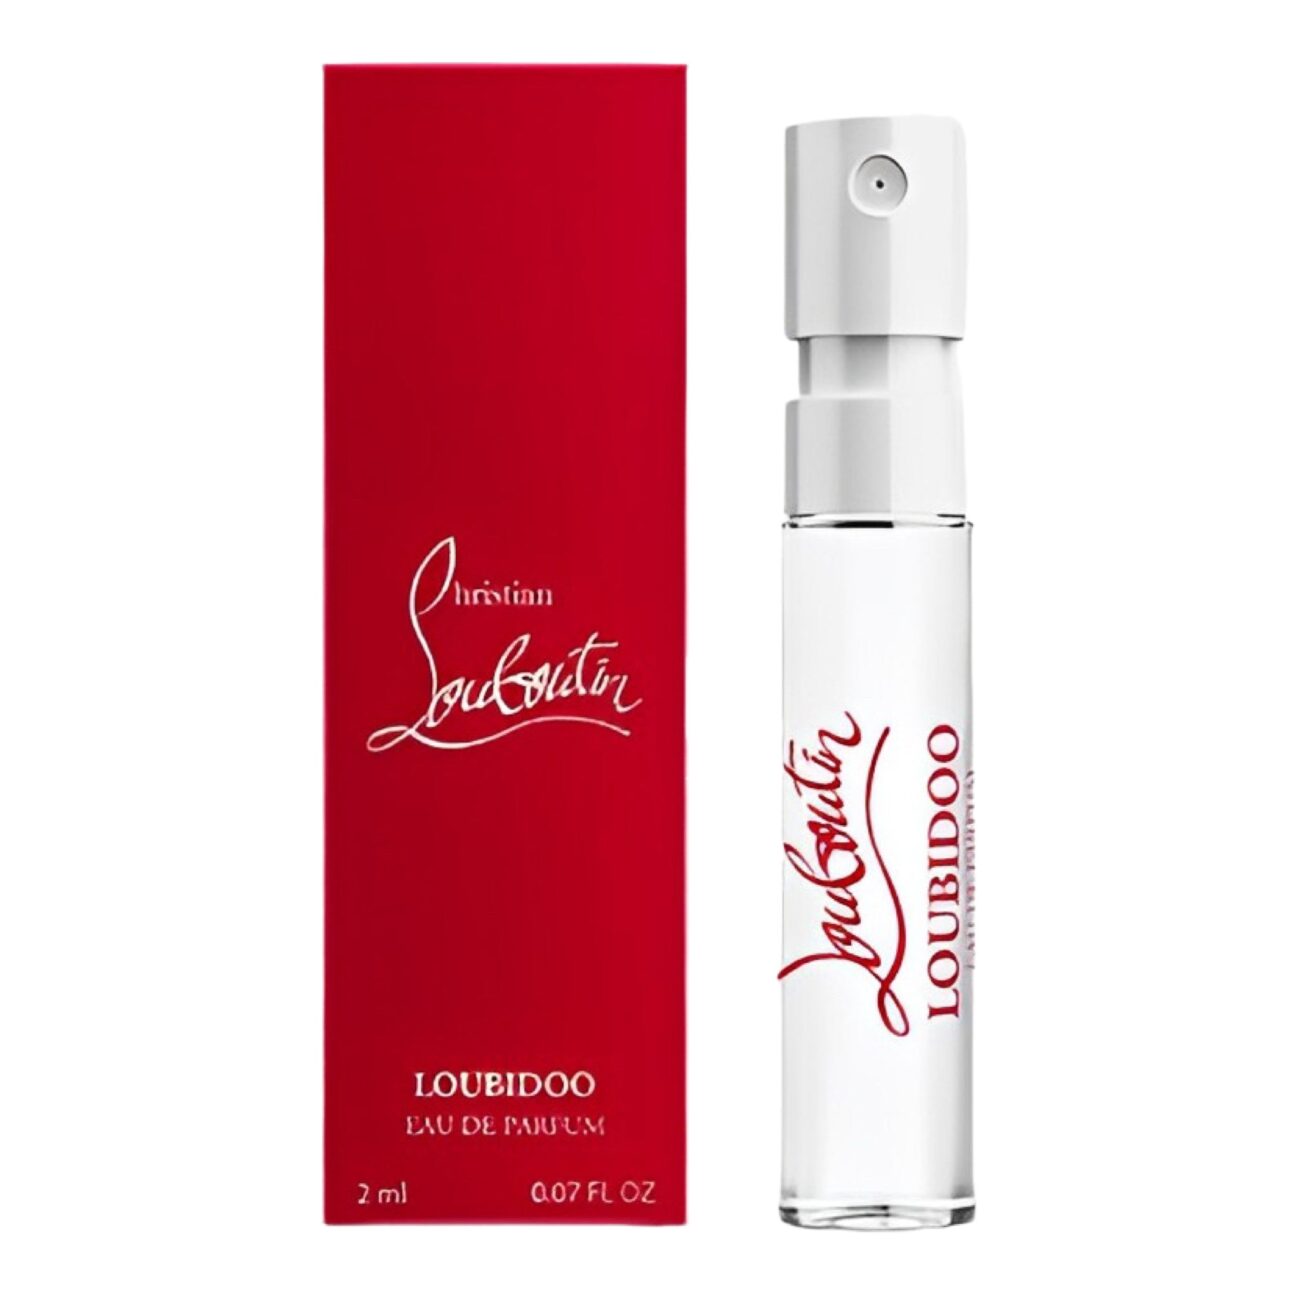 Loubirouge Eau de Parfum Sample-Christian Louboutin